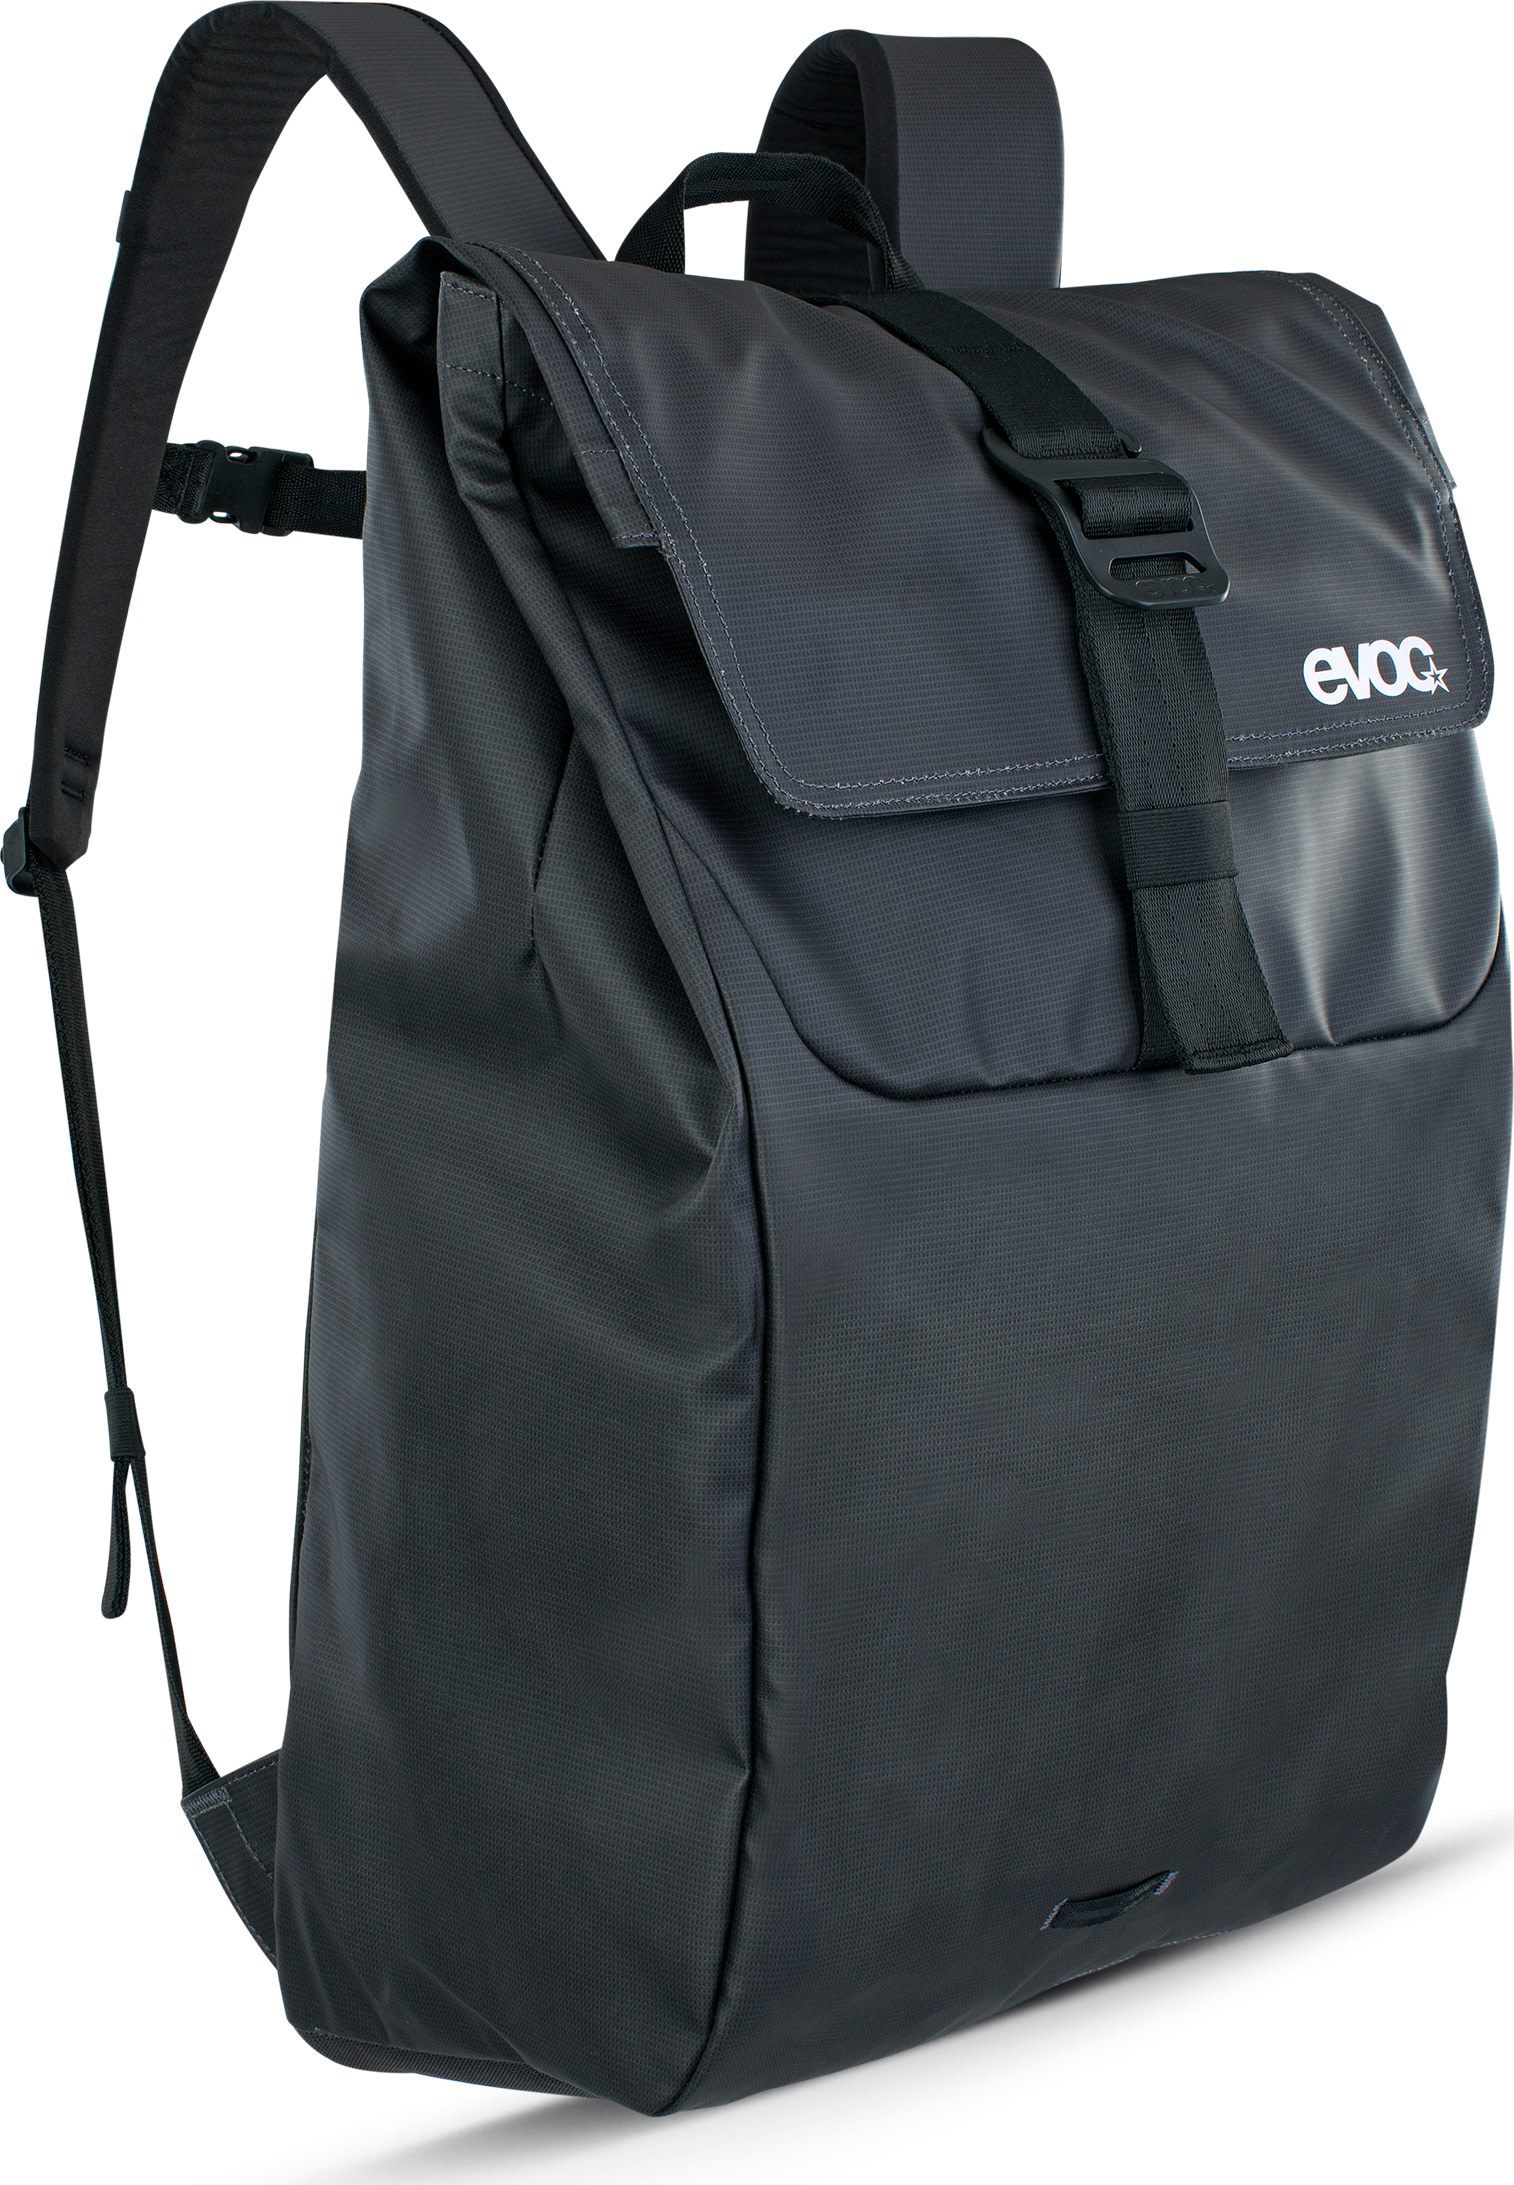 Evoc Duffle Backpack 26 carbon grey – black